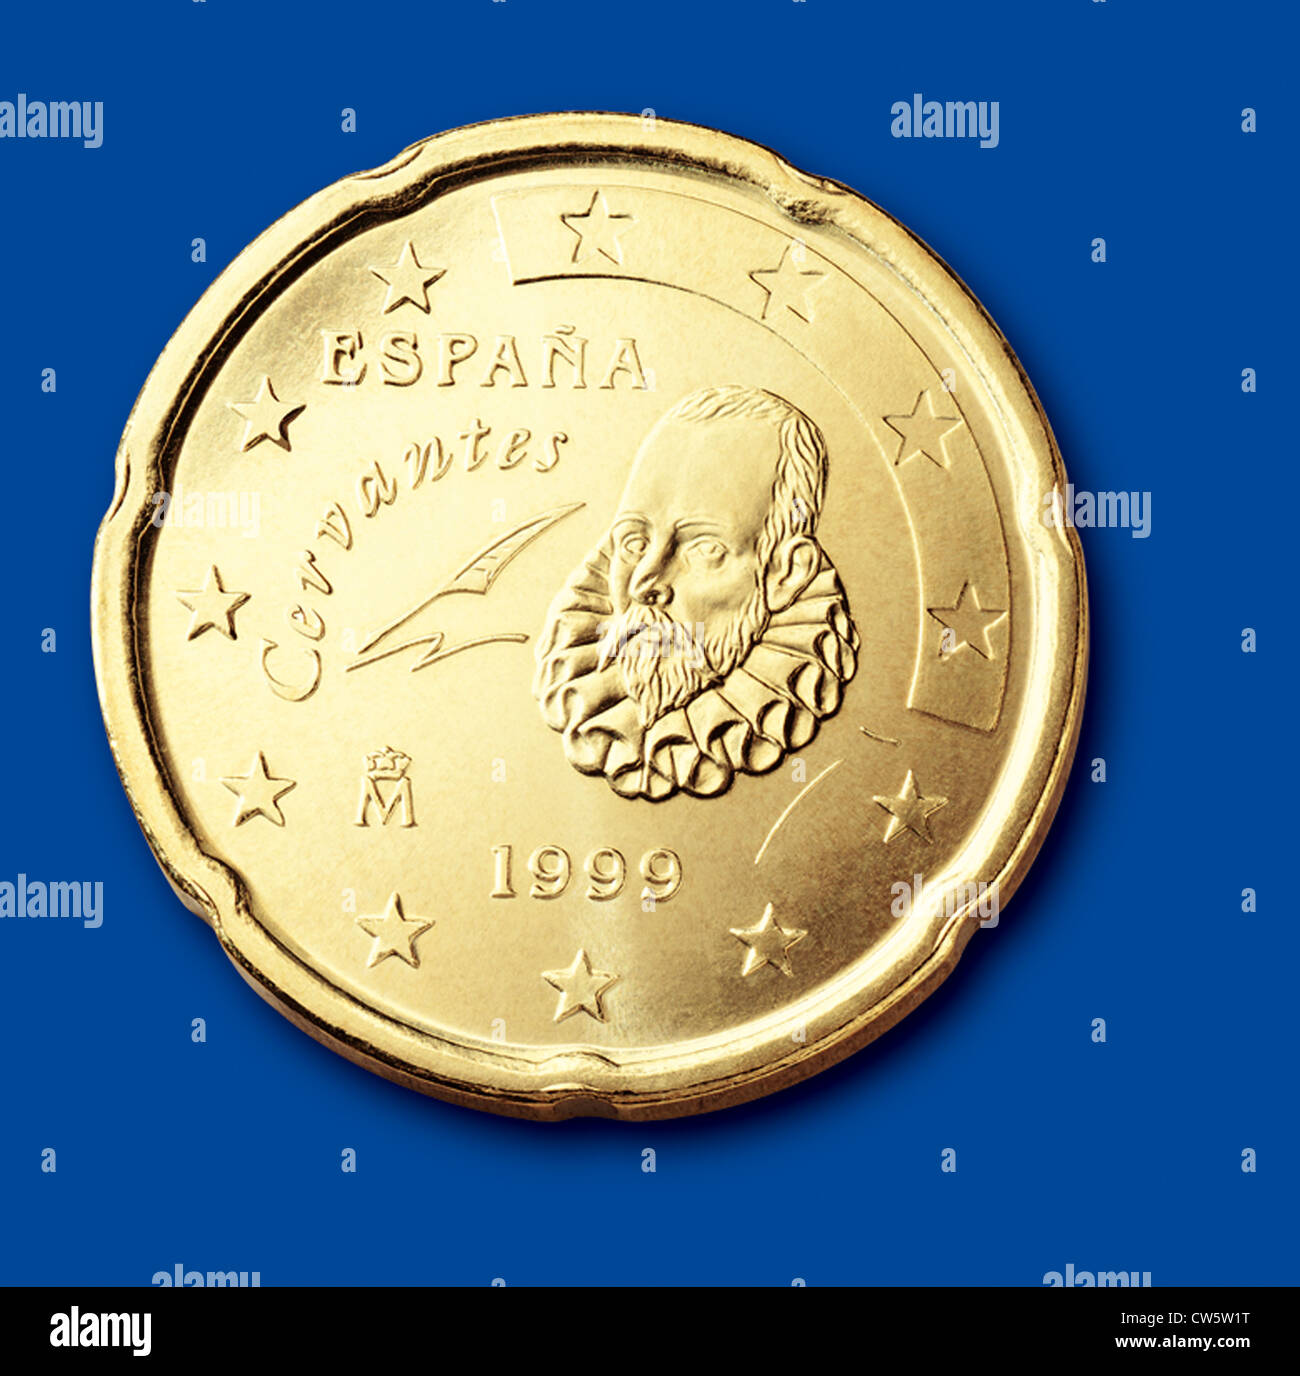 Moneta da 20 centesimi (Spagna Foto stock - Alamy